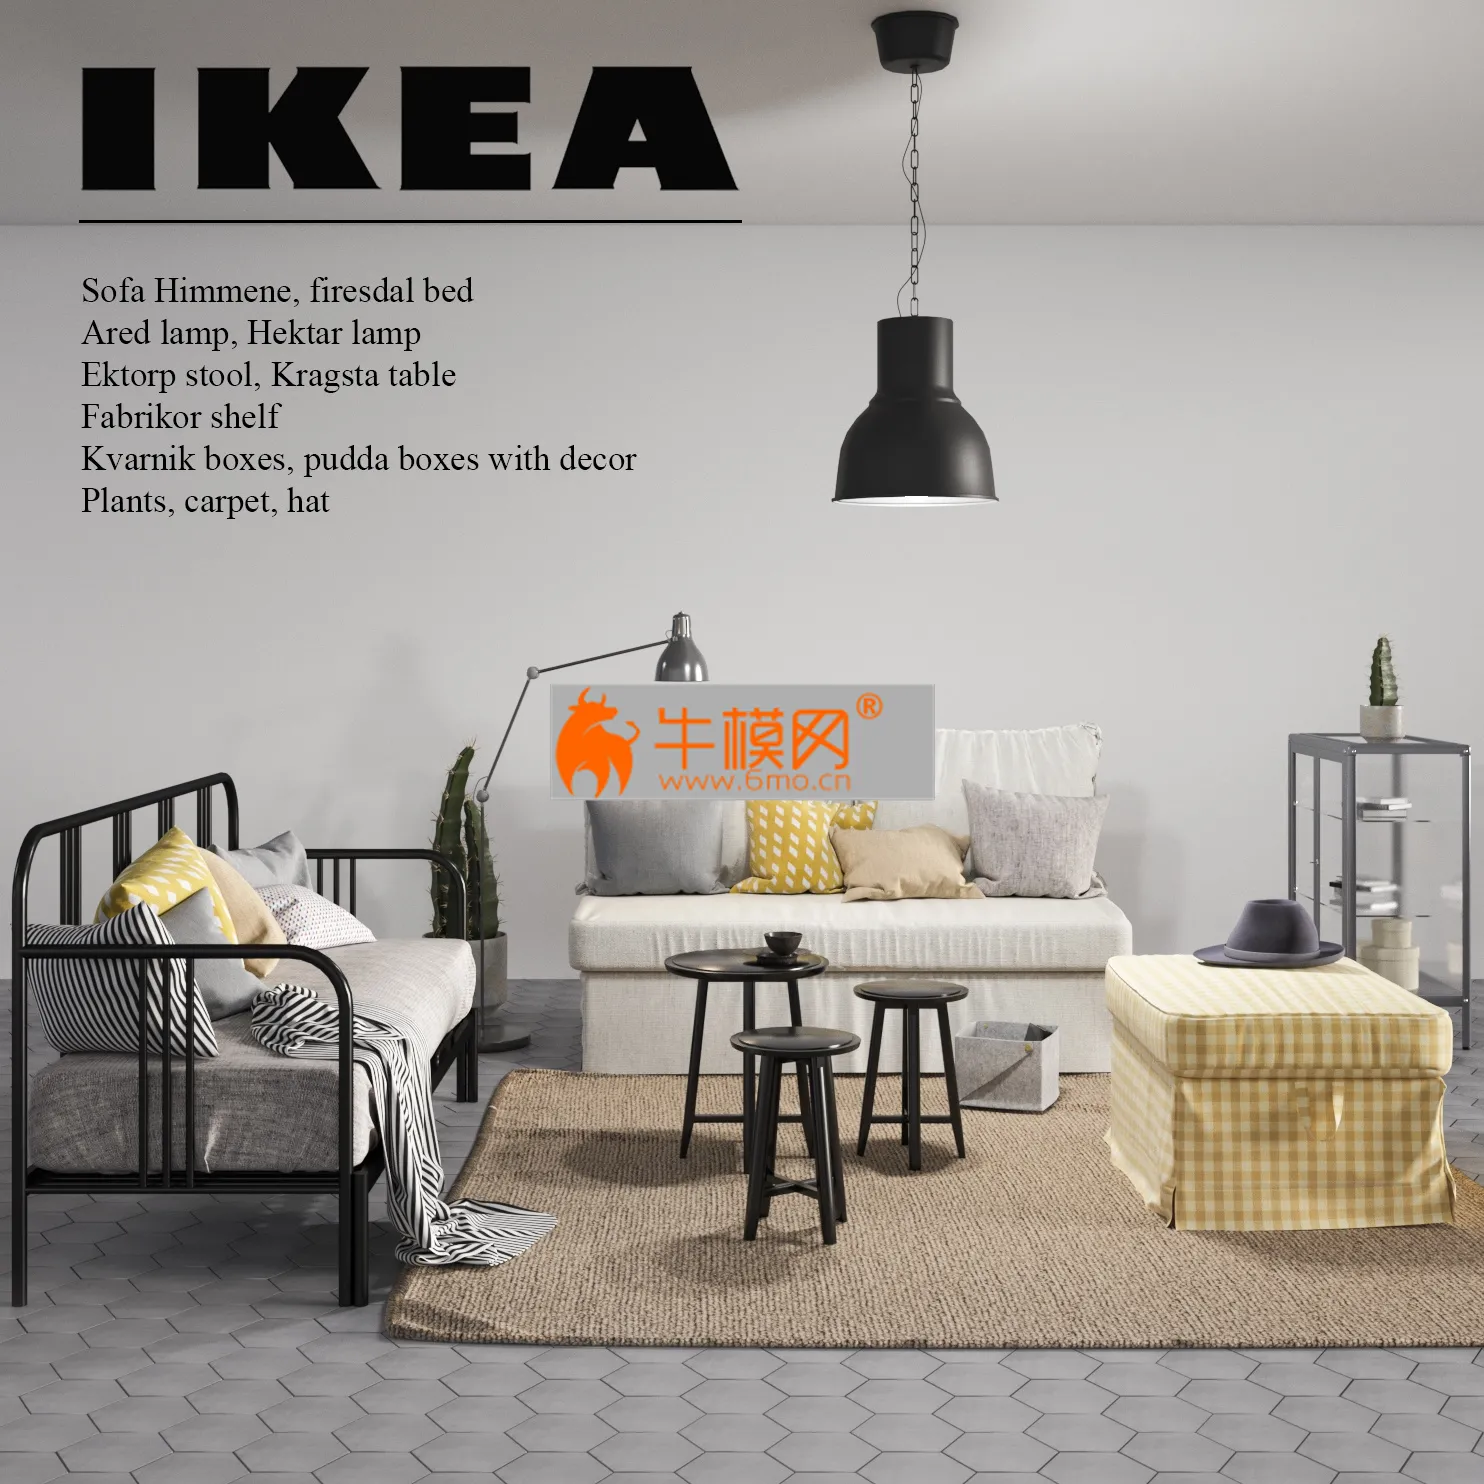 Ikea Set from the new catalog 2017-2018 – 2009